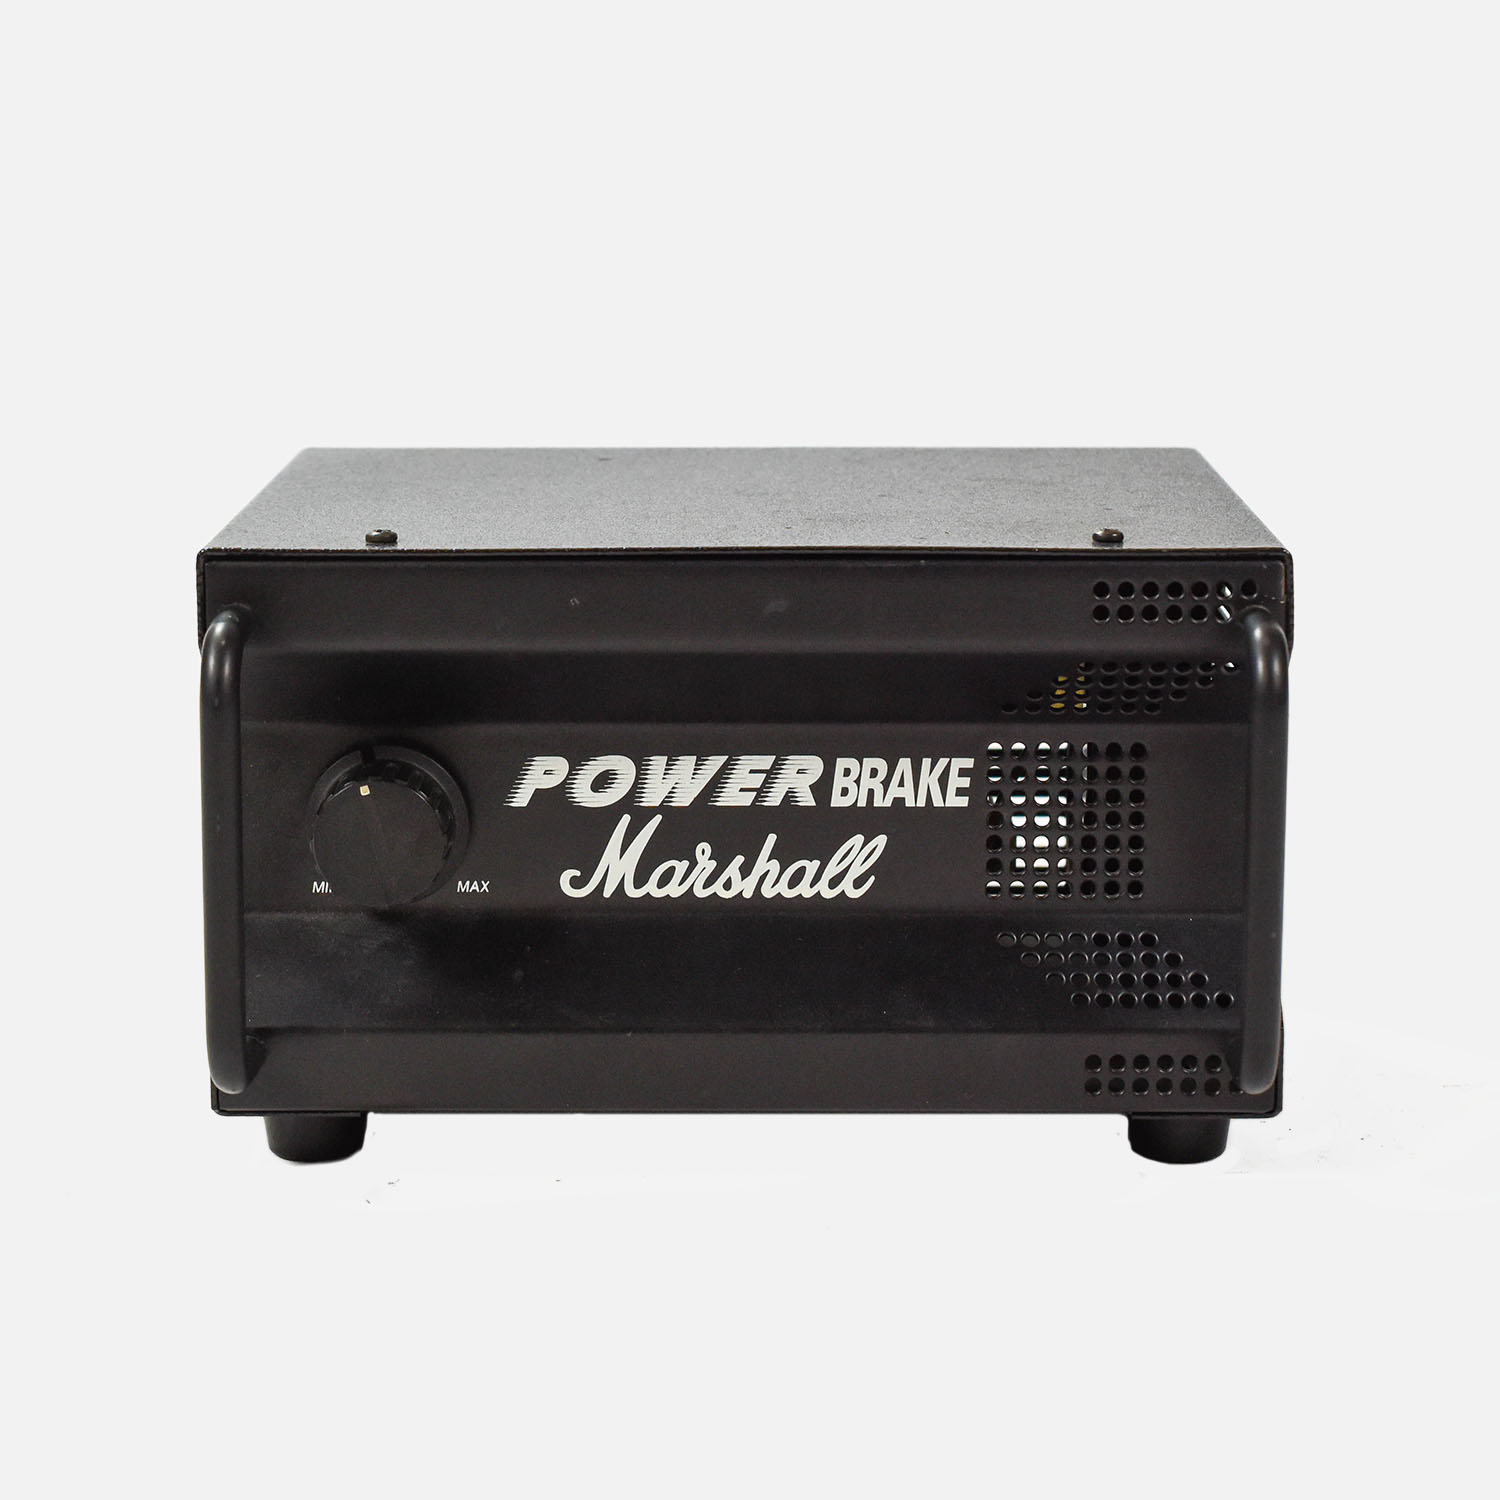 Marshall Power Brake PB-100 Attenuator